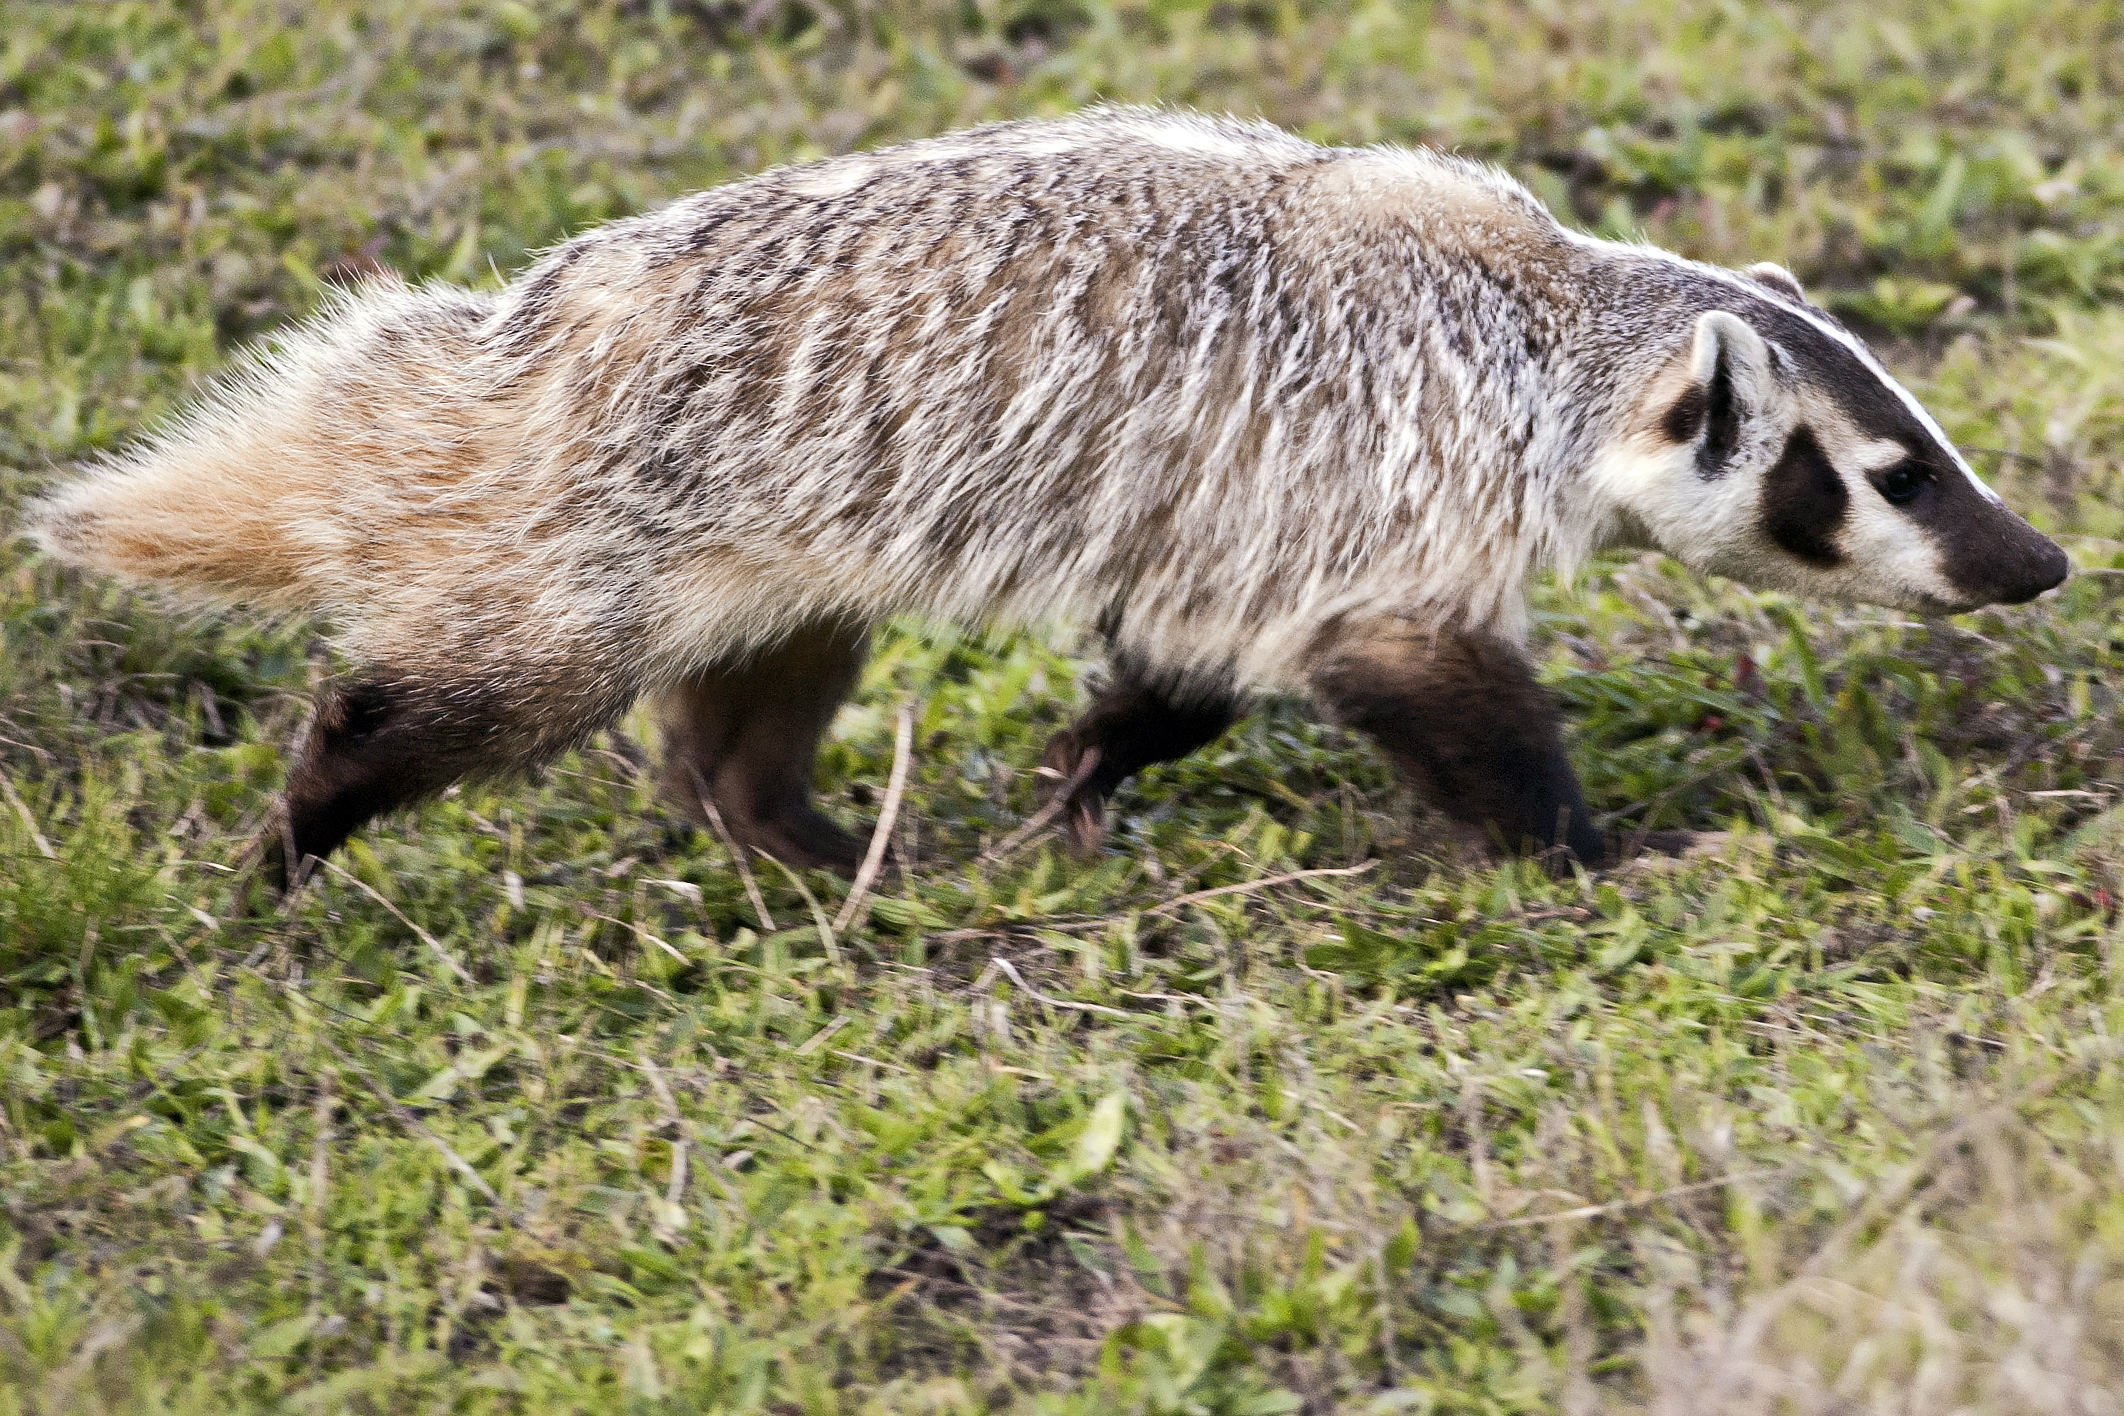 Are badgers predator or prey?